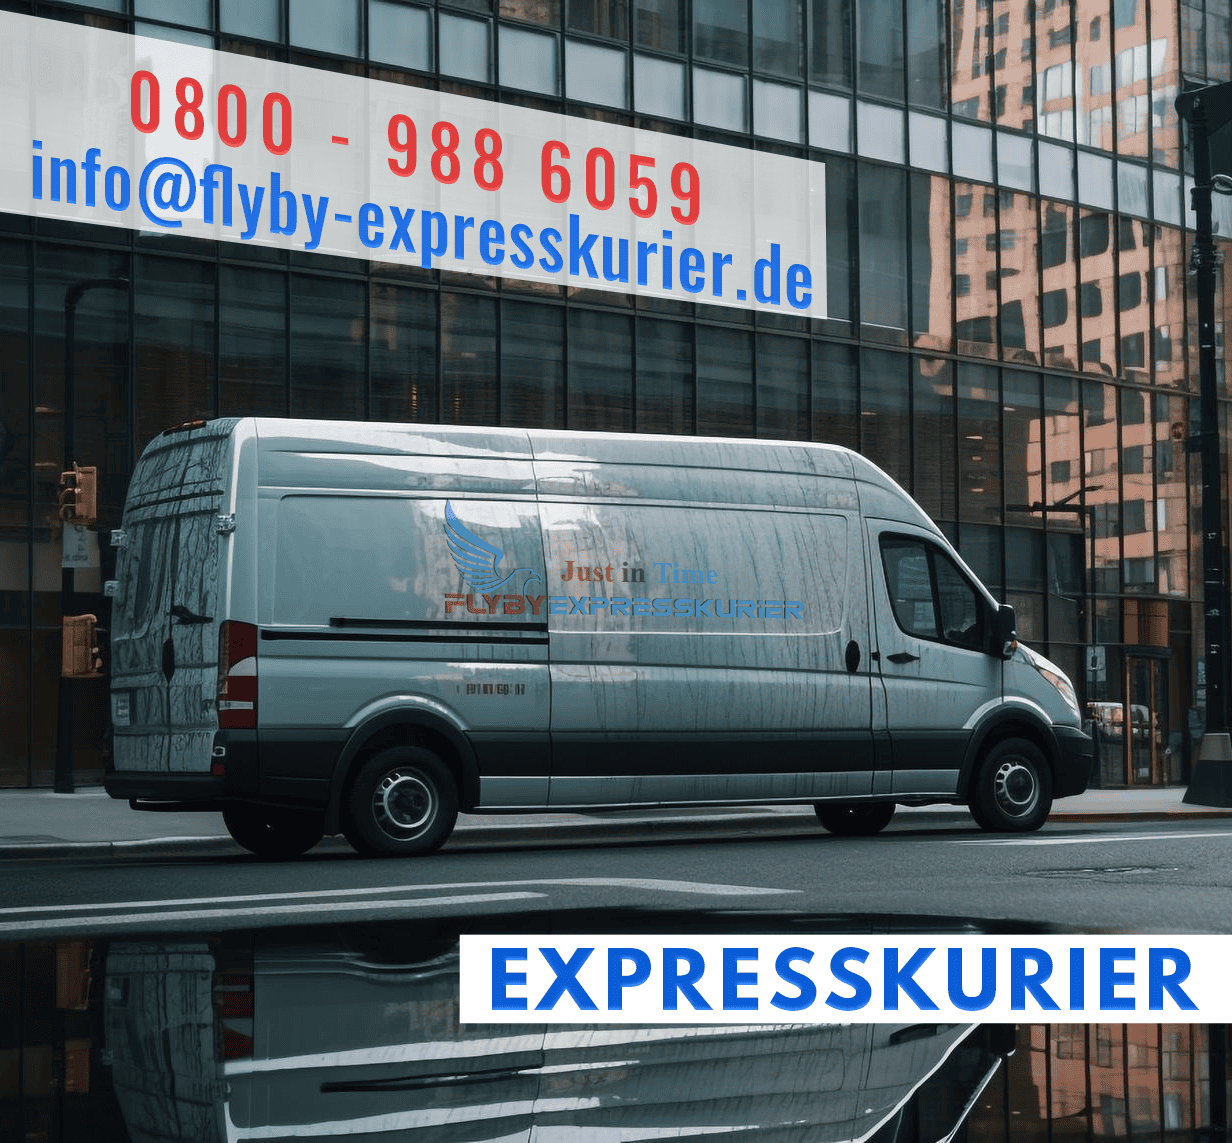 (c) Flyby-expresskurier.de